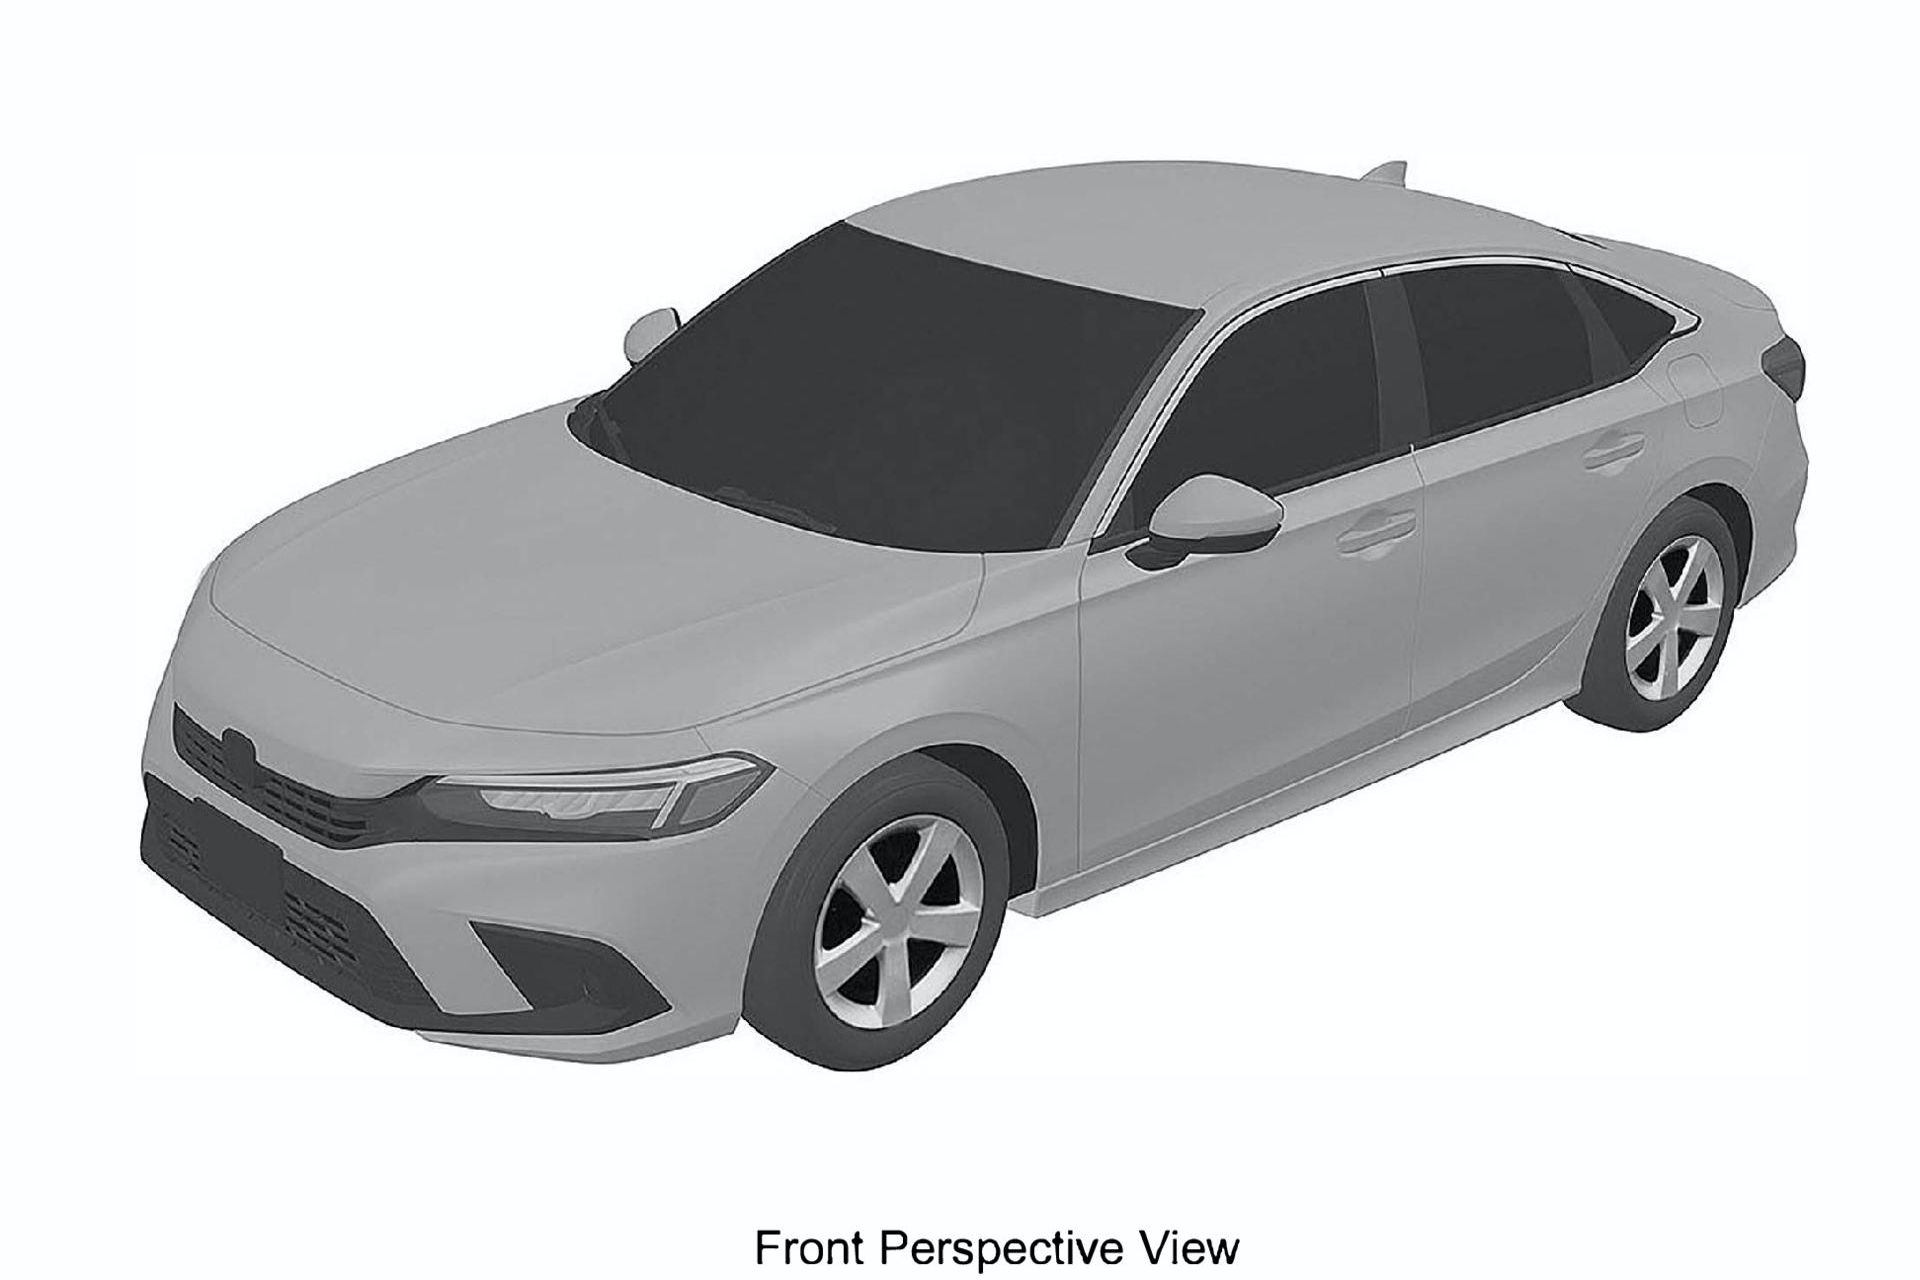 Honda Civic 2022 tiếp lục lộ ảnh không nguỵ trang 2022-honda-civic-sedan-patent-images-1.jpg